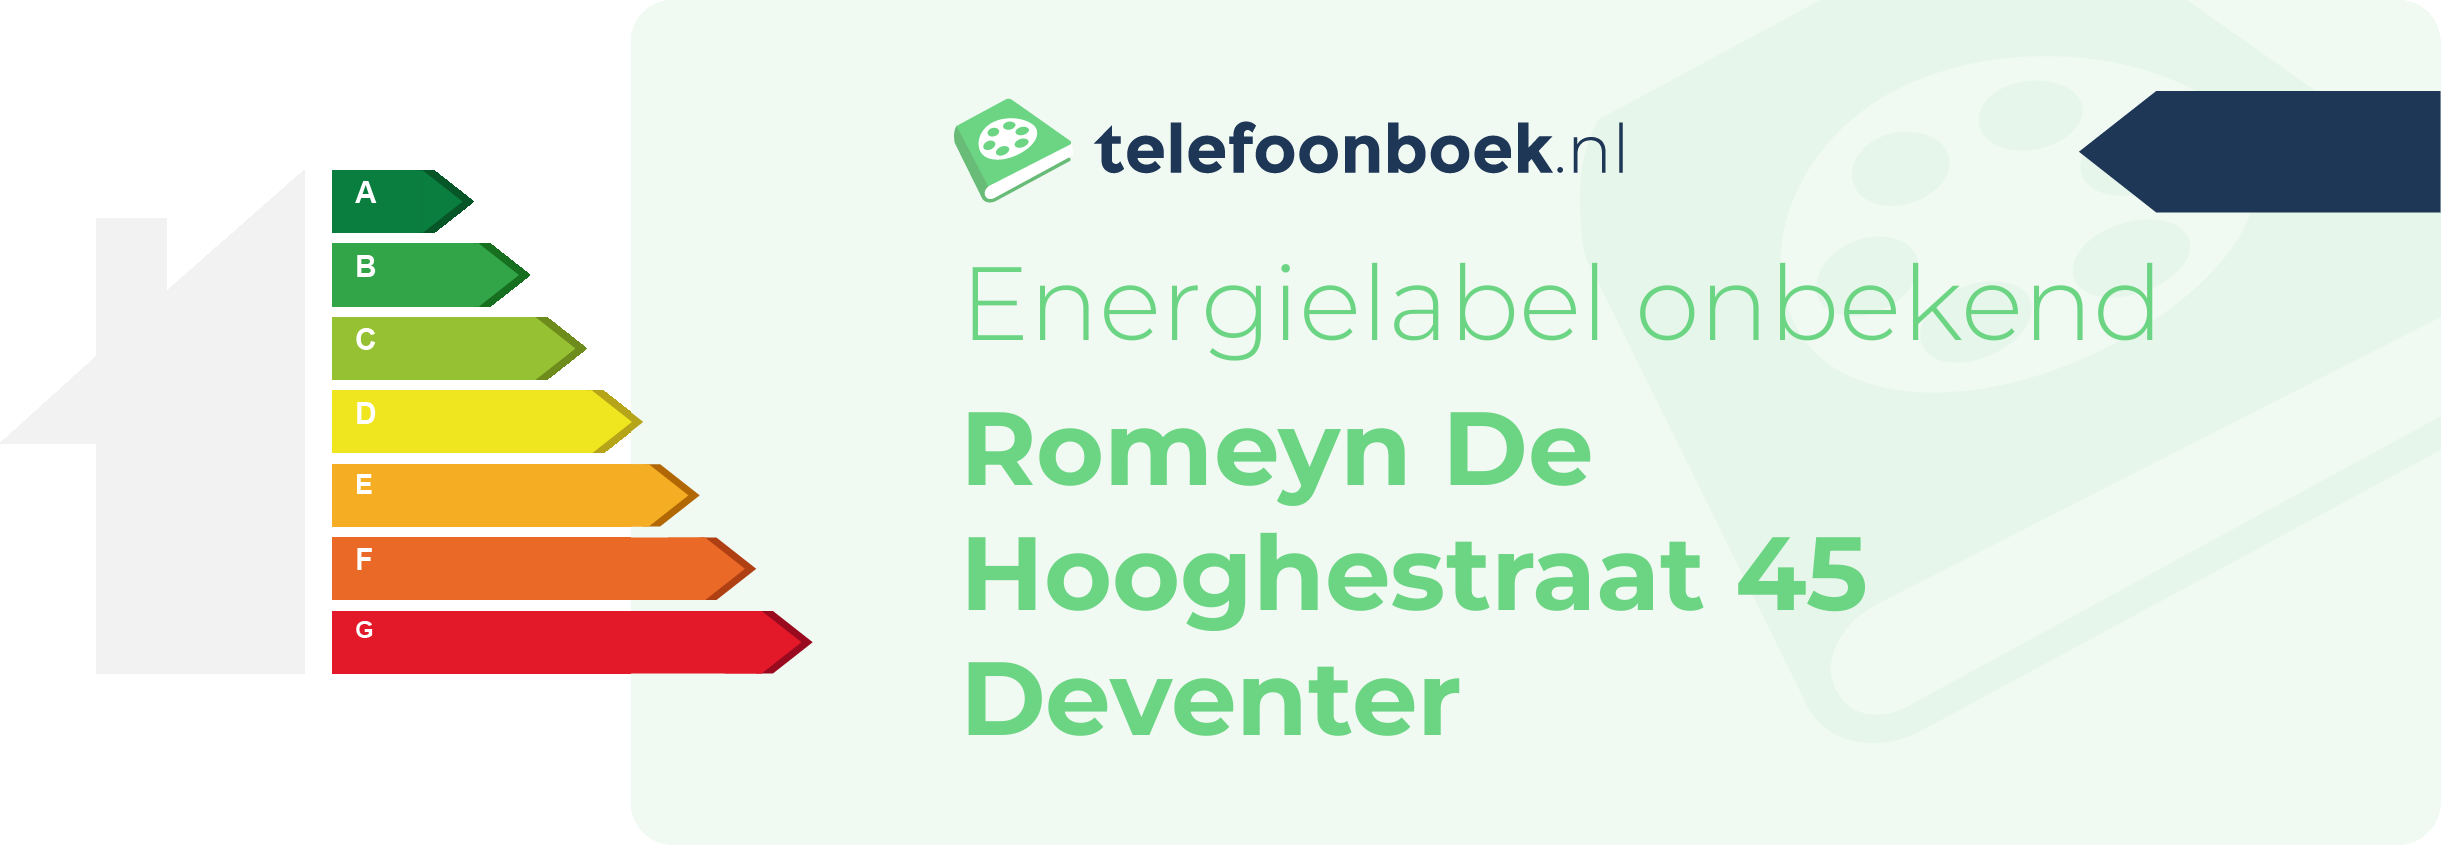 Energielabel Romeyn De Hooghestraat 45 Deventer